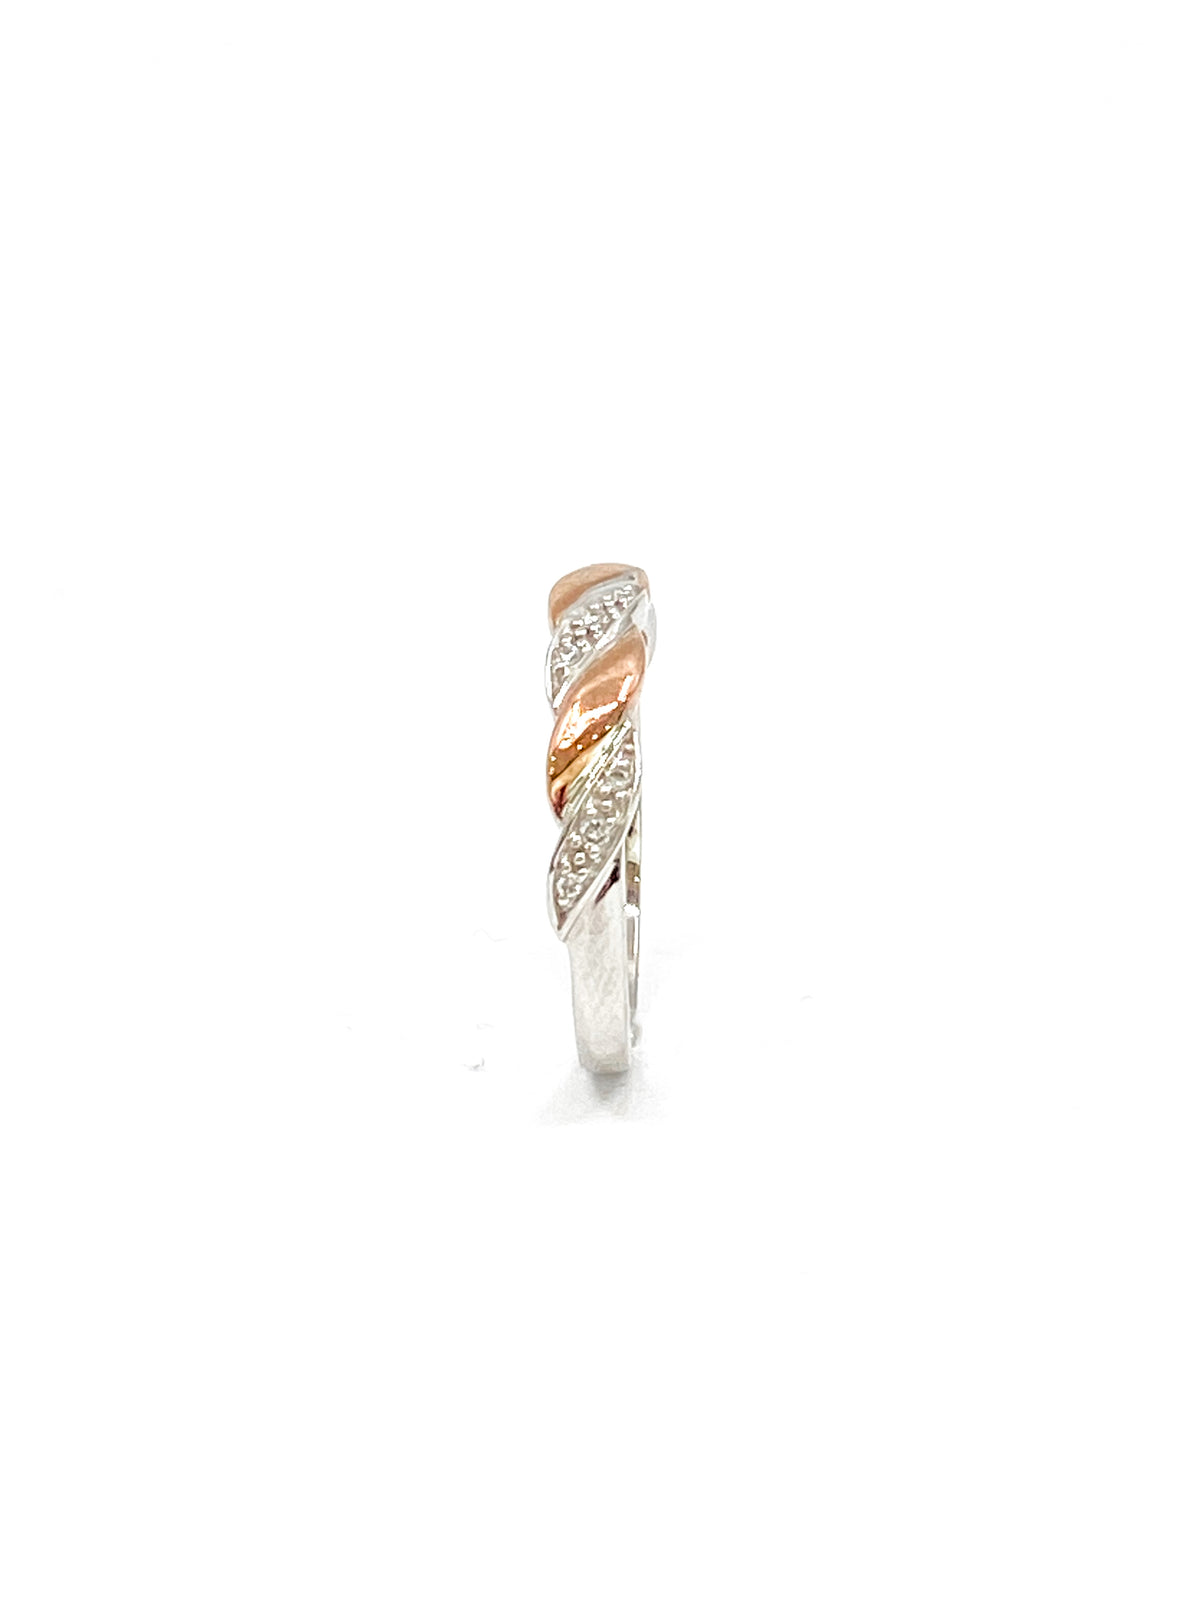 10k White &amp; Rose Gold 0.054cttw Diamond Ring, size 6.5